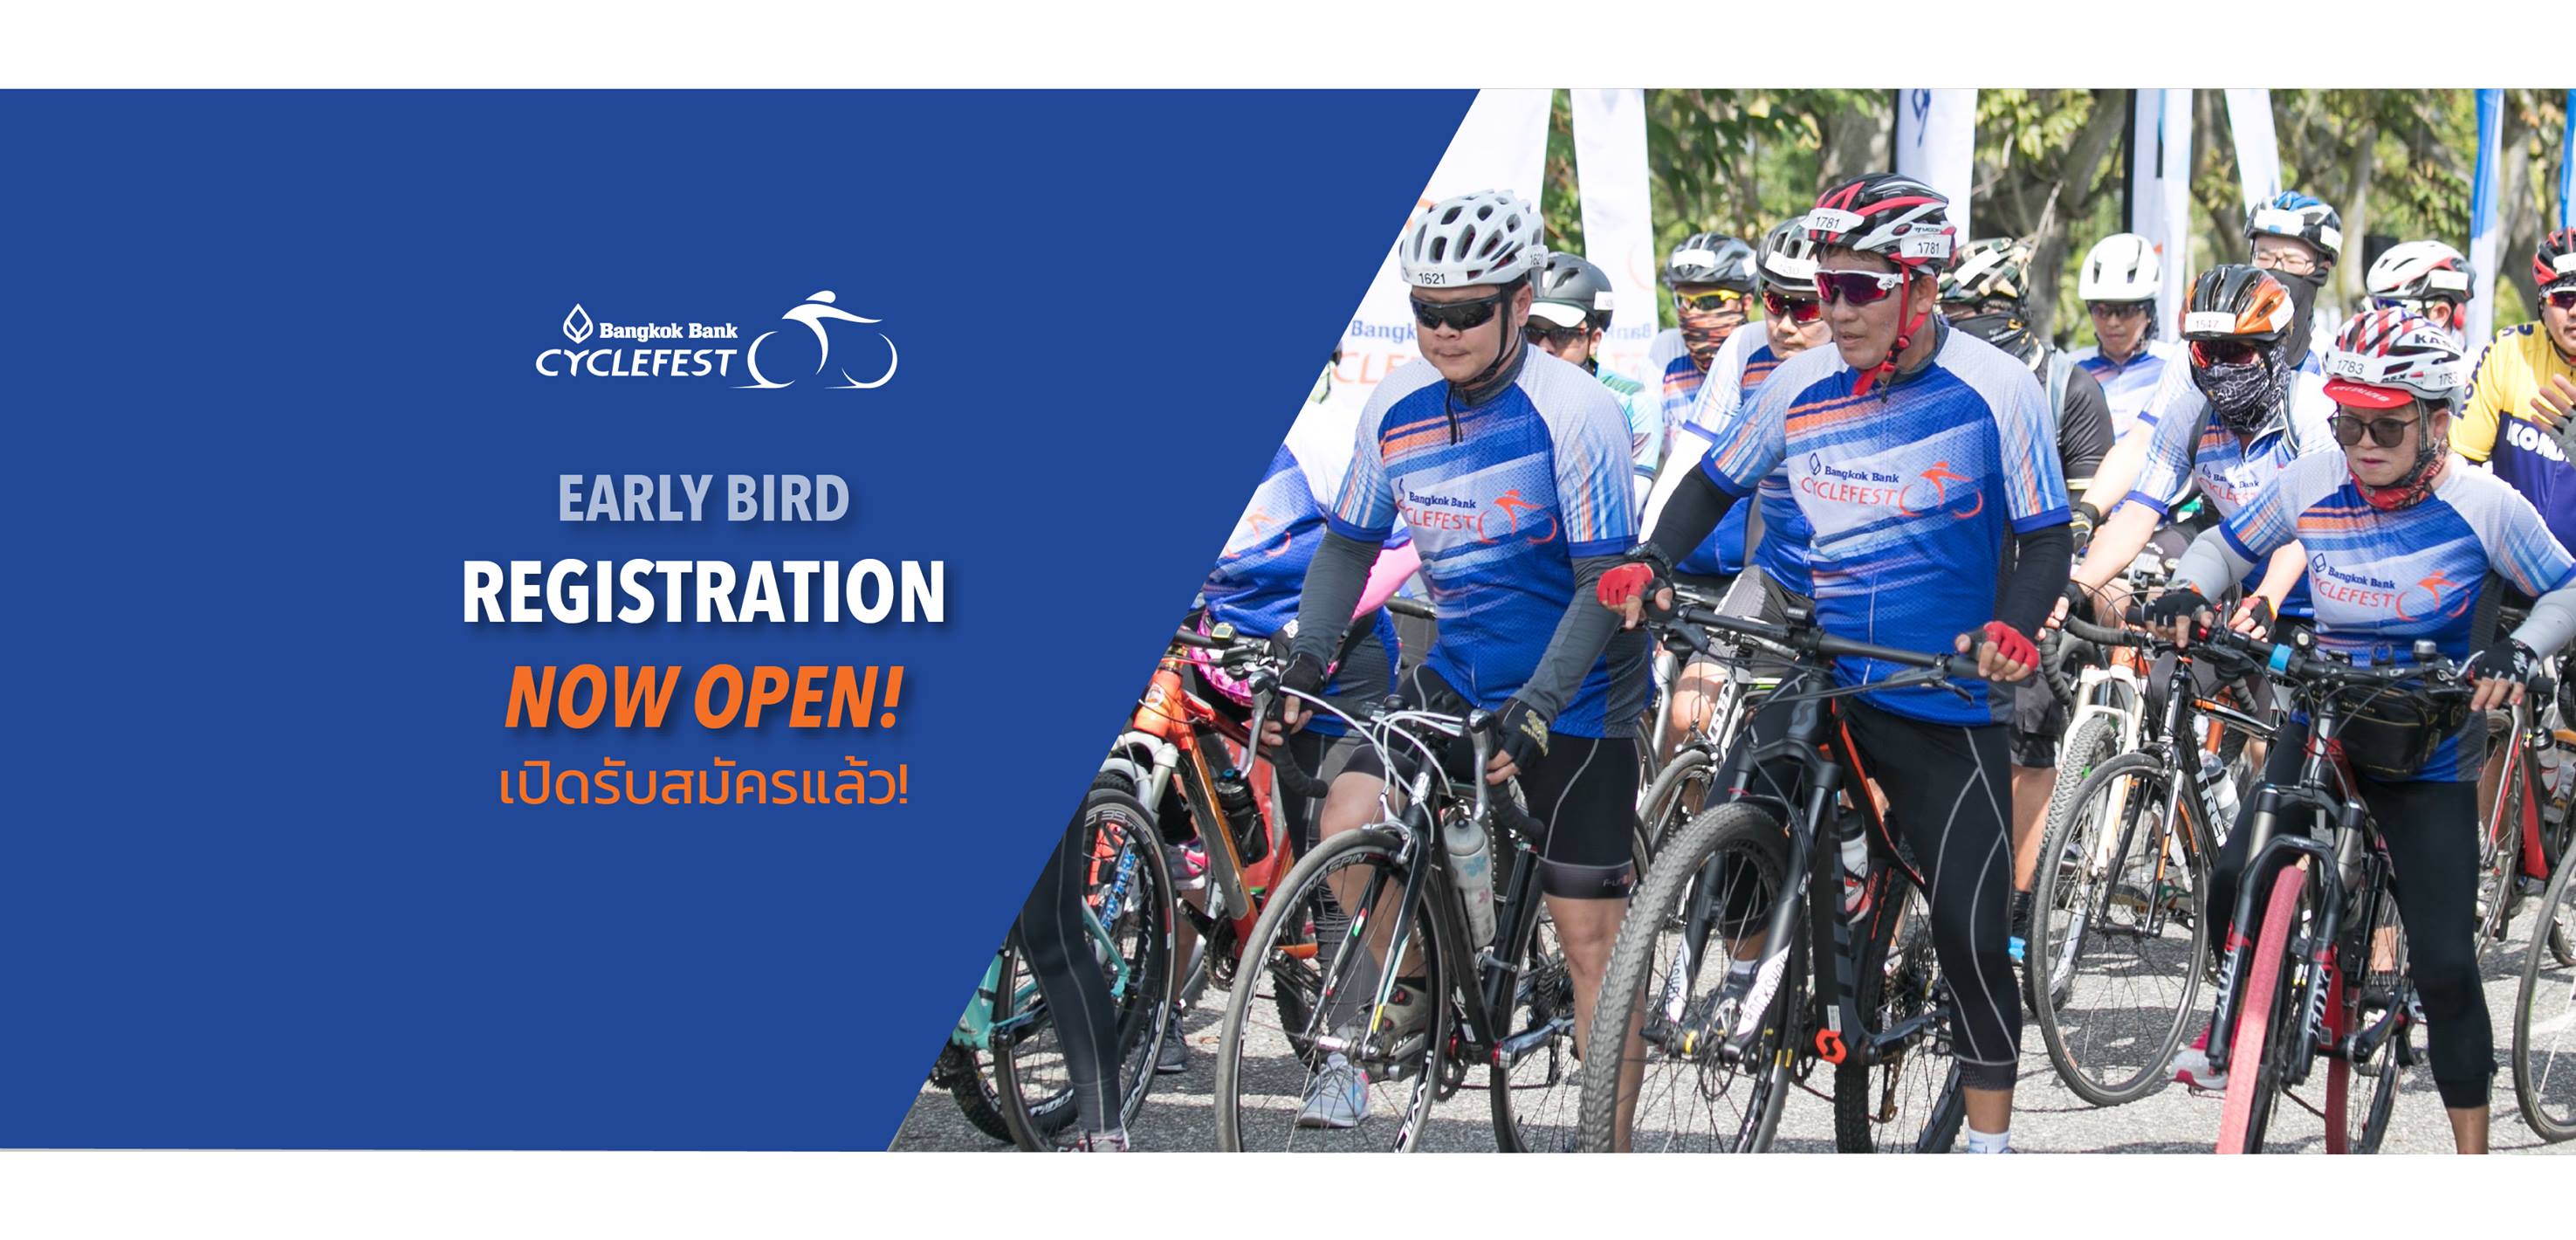 Bangkok Bank CycleFest 2018